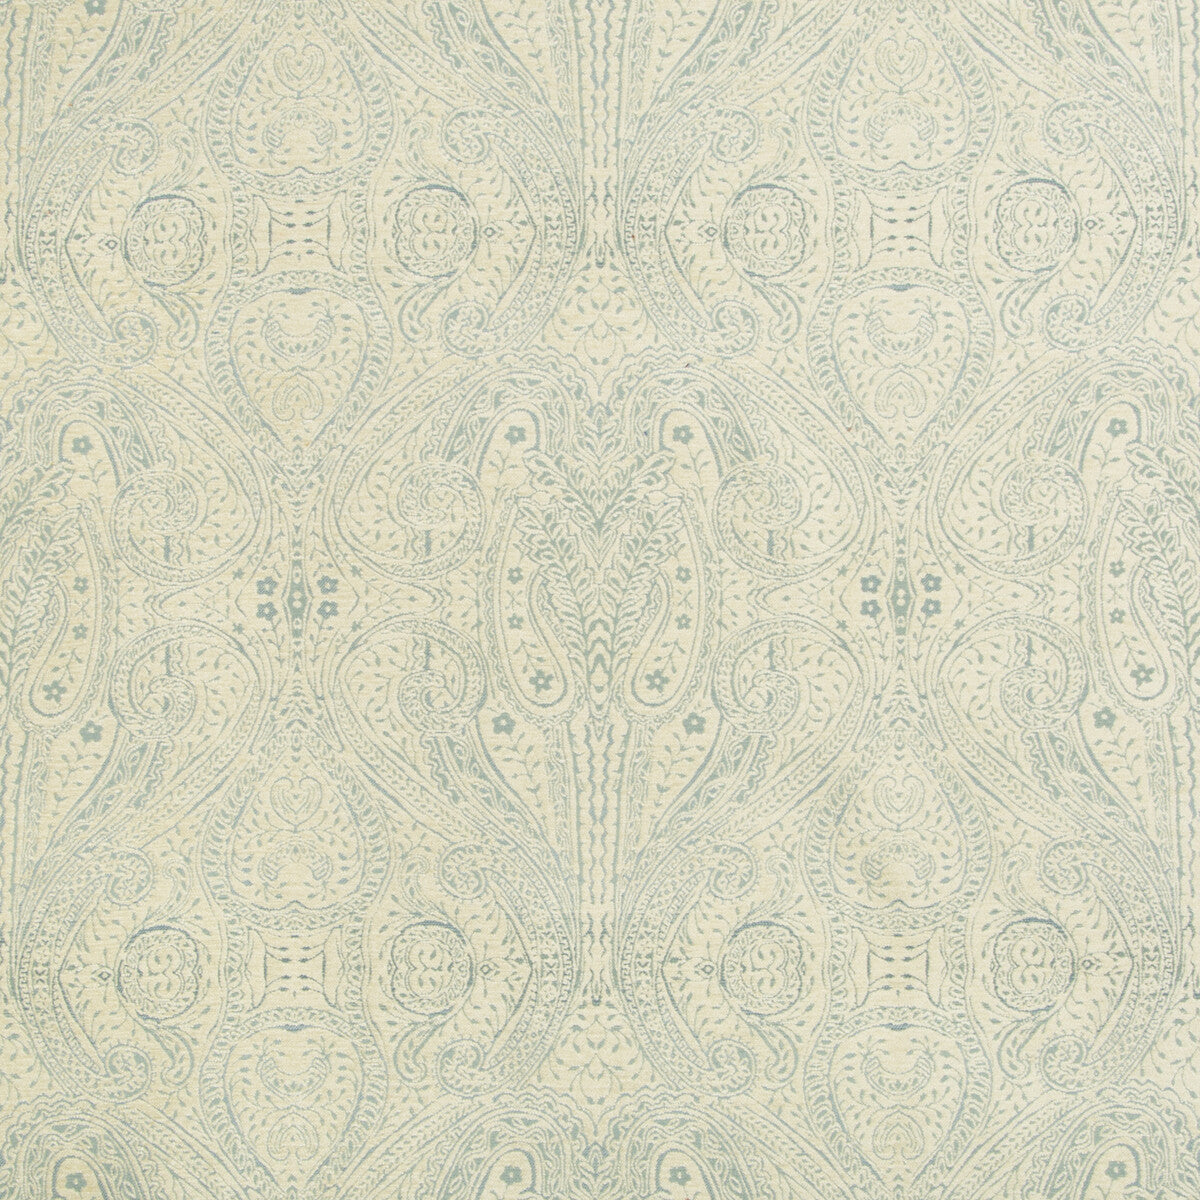 Kravet Design fabric in 34720-1615 color - pattern 34720.1615.0 - by Kravet Design in the Gis collection